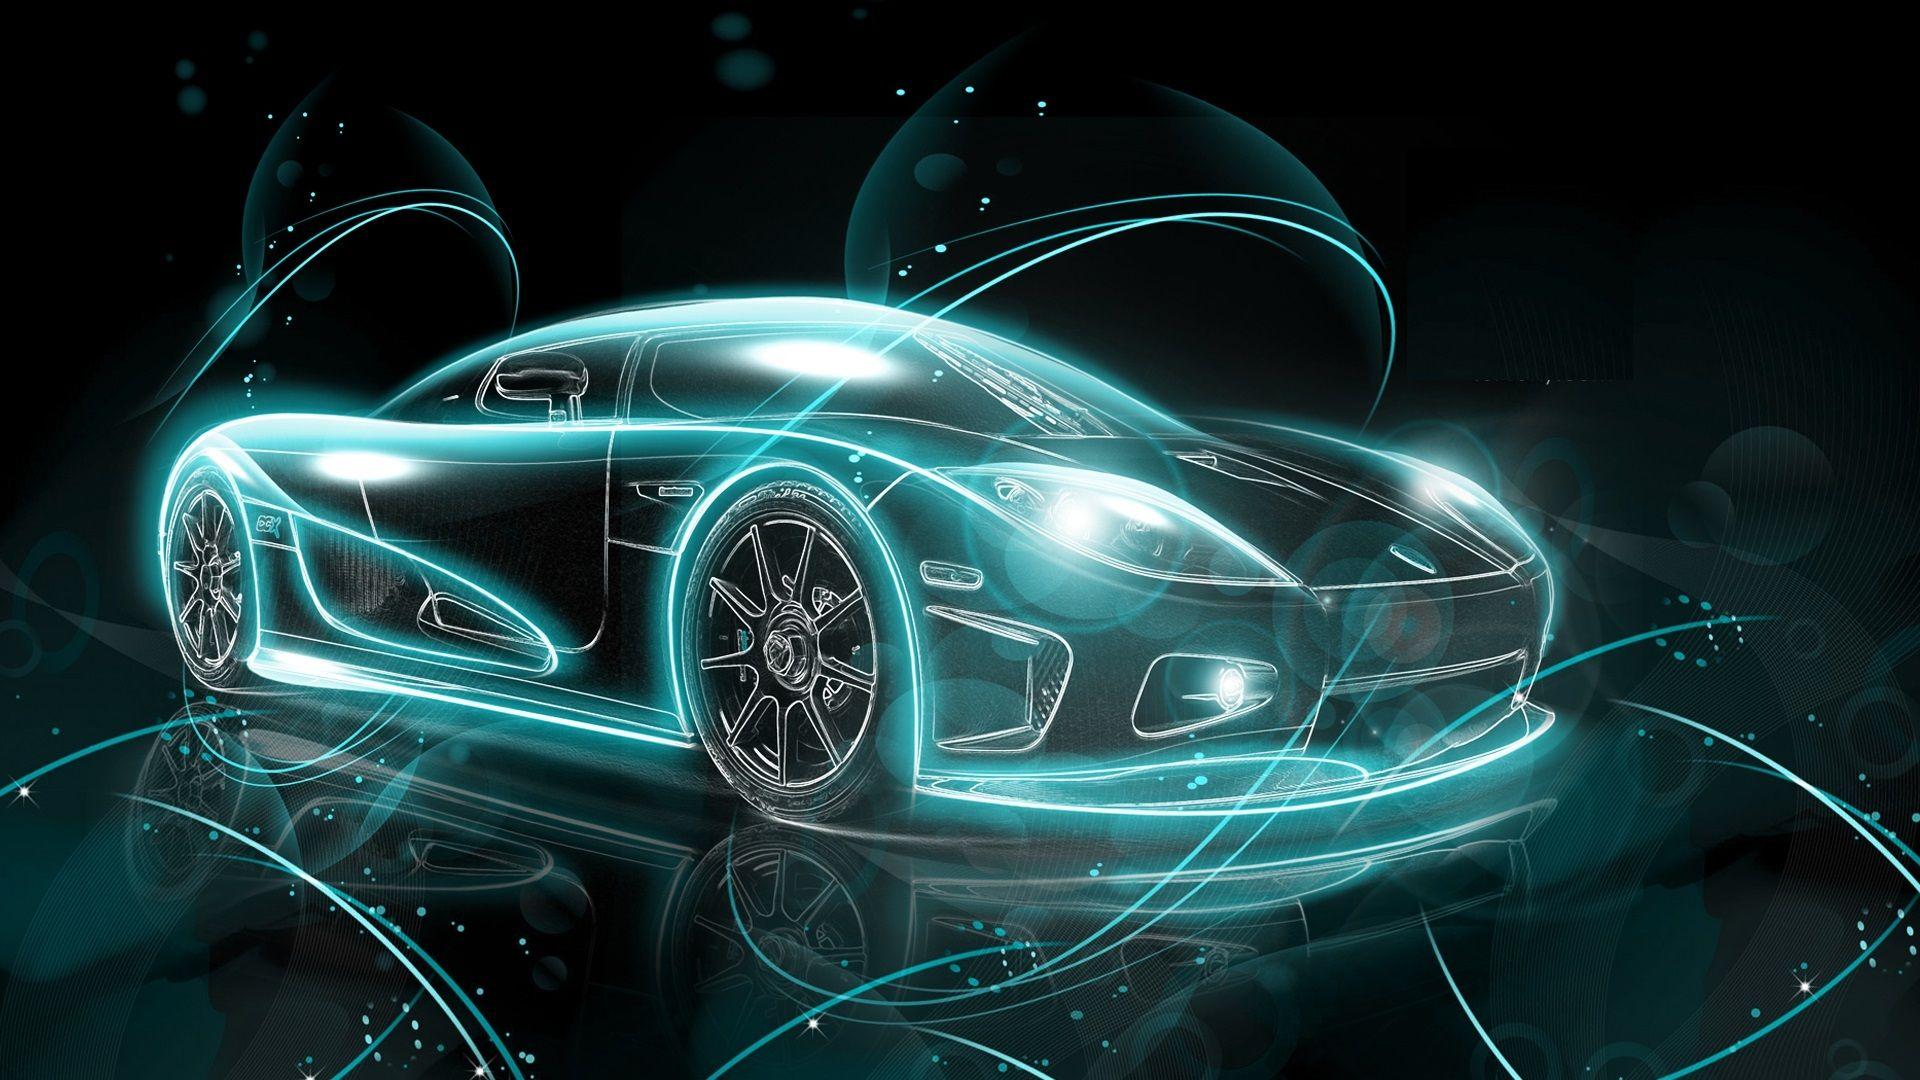 Abstract Sports Car HD Wallpaper. Car Wallpaper. Neon car, Cool car picture, Car wallpaper